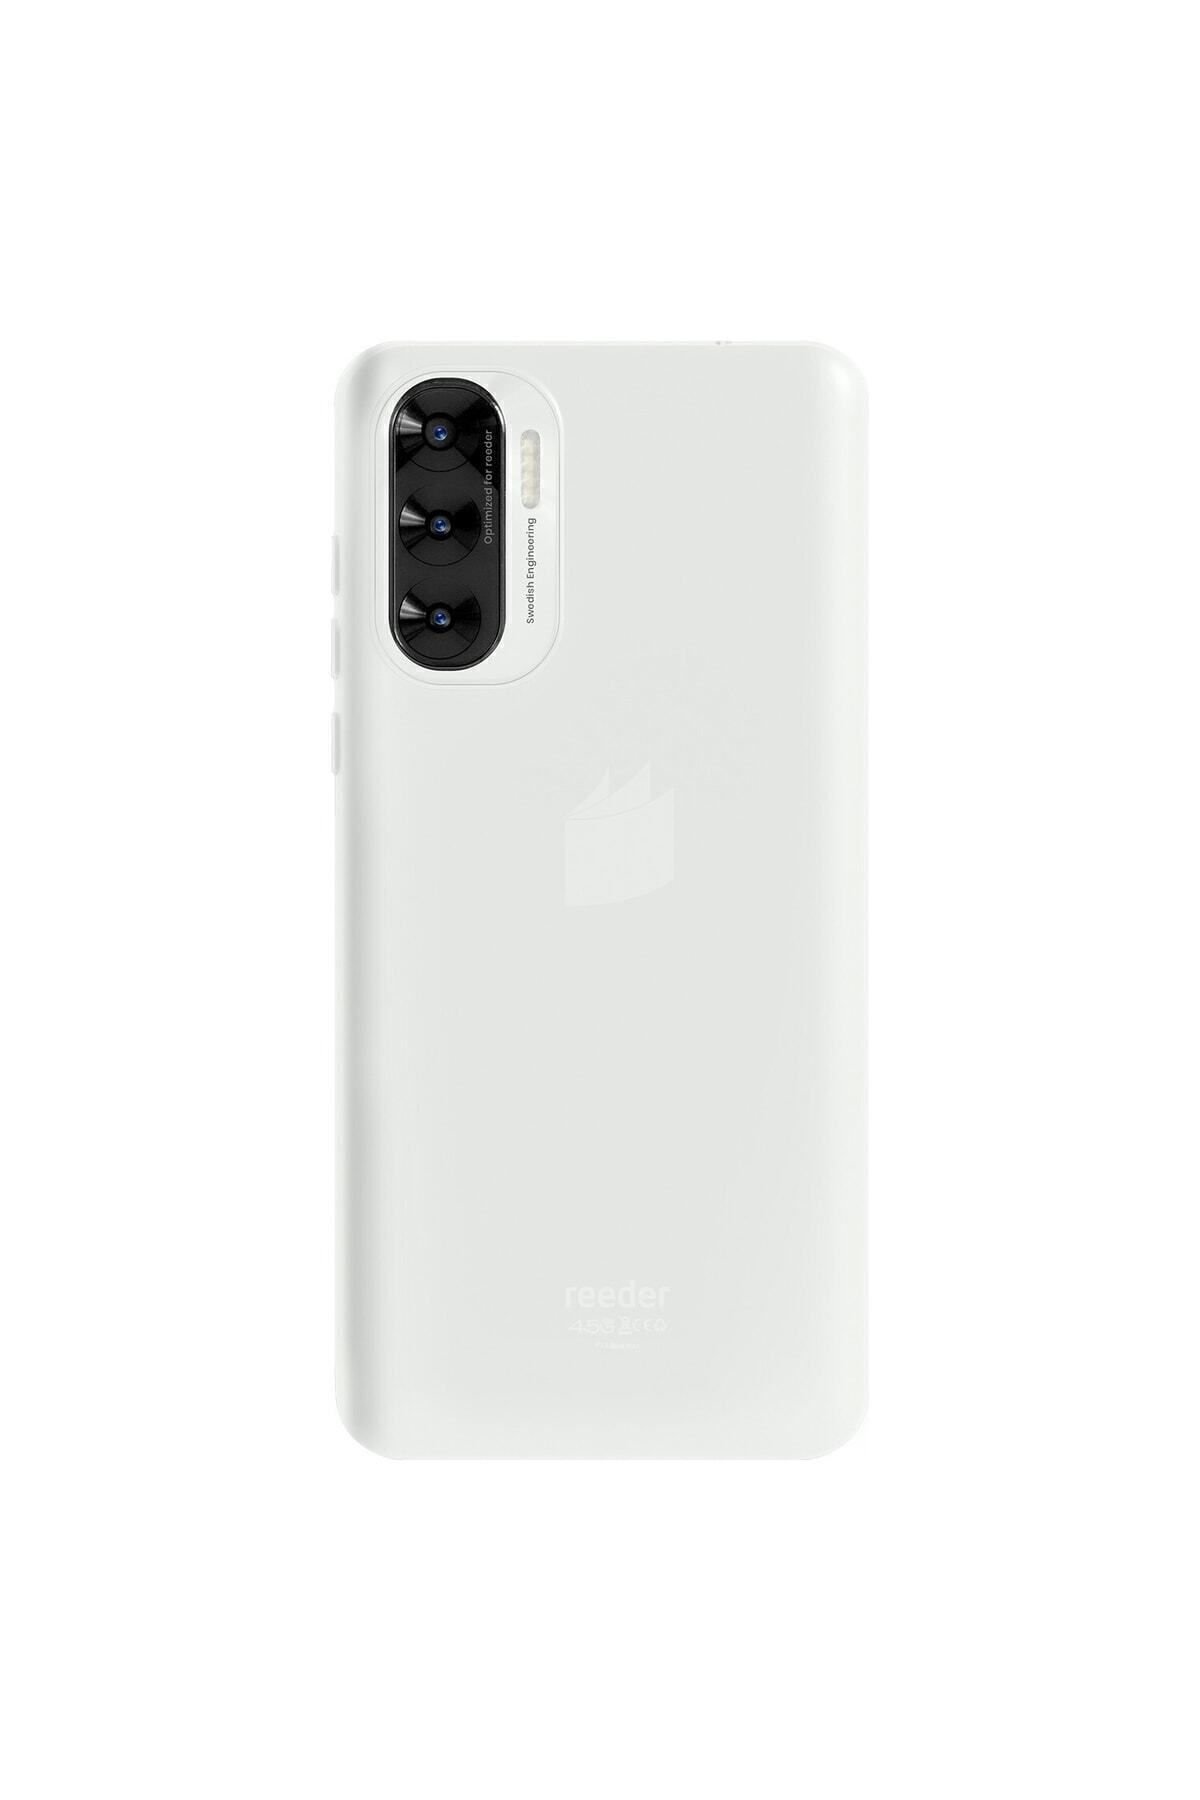 P13 Blue Max L 2022 4GB+64 GB Beyaz Cep Telefonu (Reeder Türkiye Garantili)